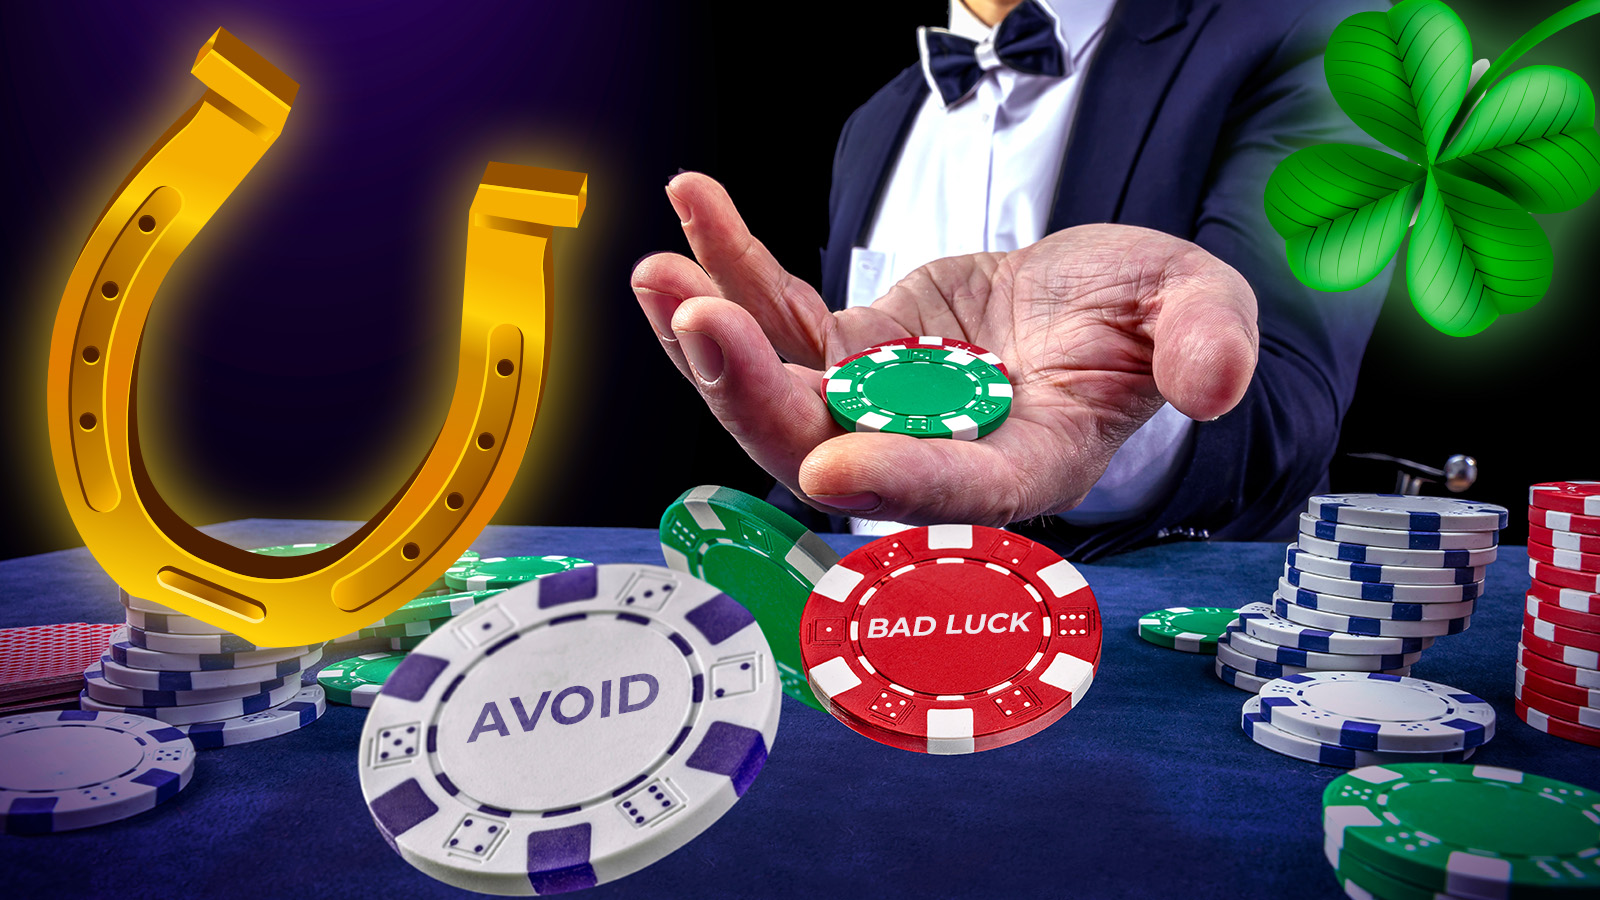 Avoid Bad Luck While Gambling